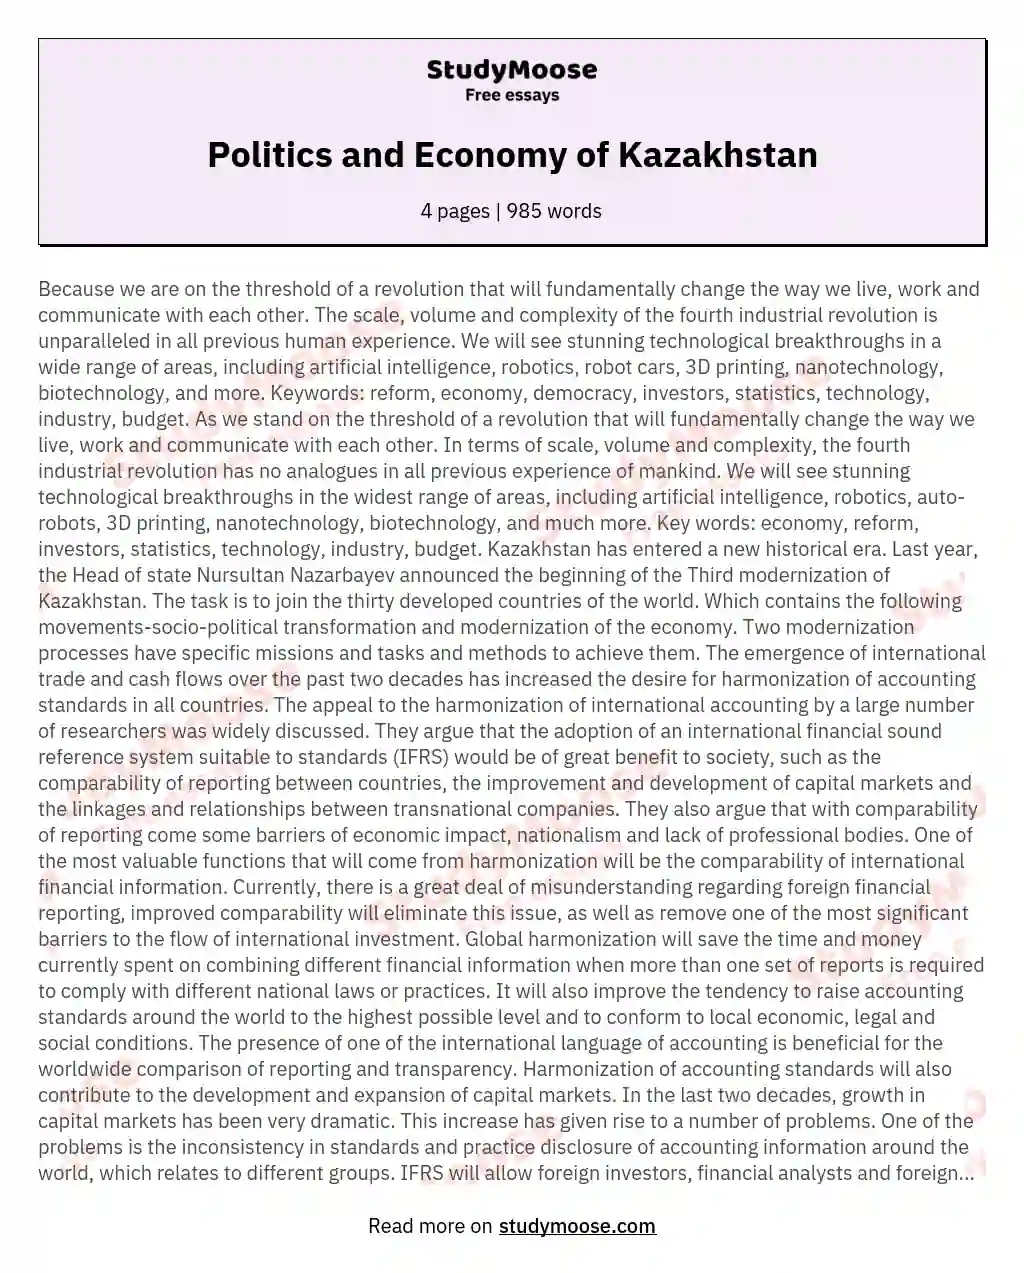 Politics and Economy of Kazakhstan essay